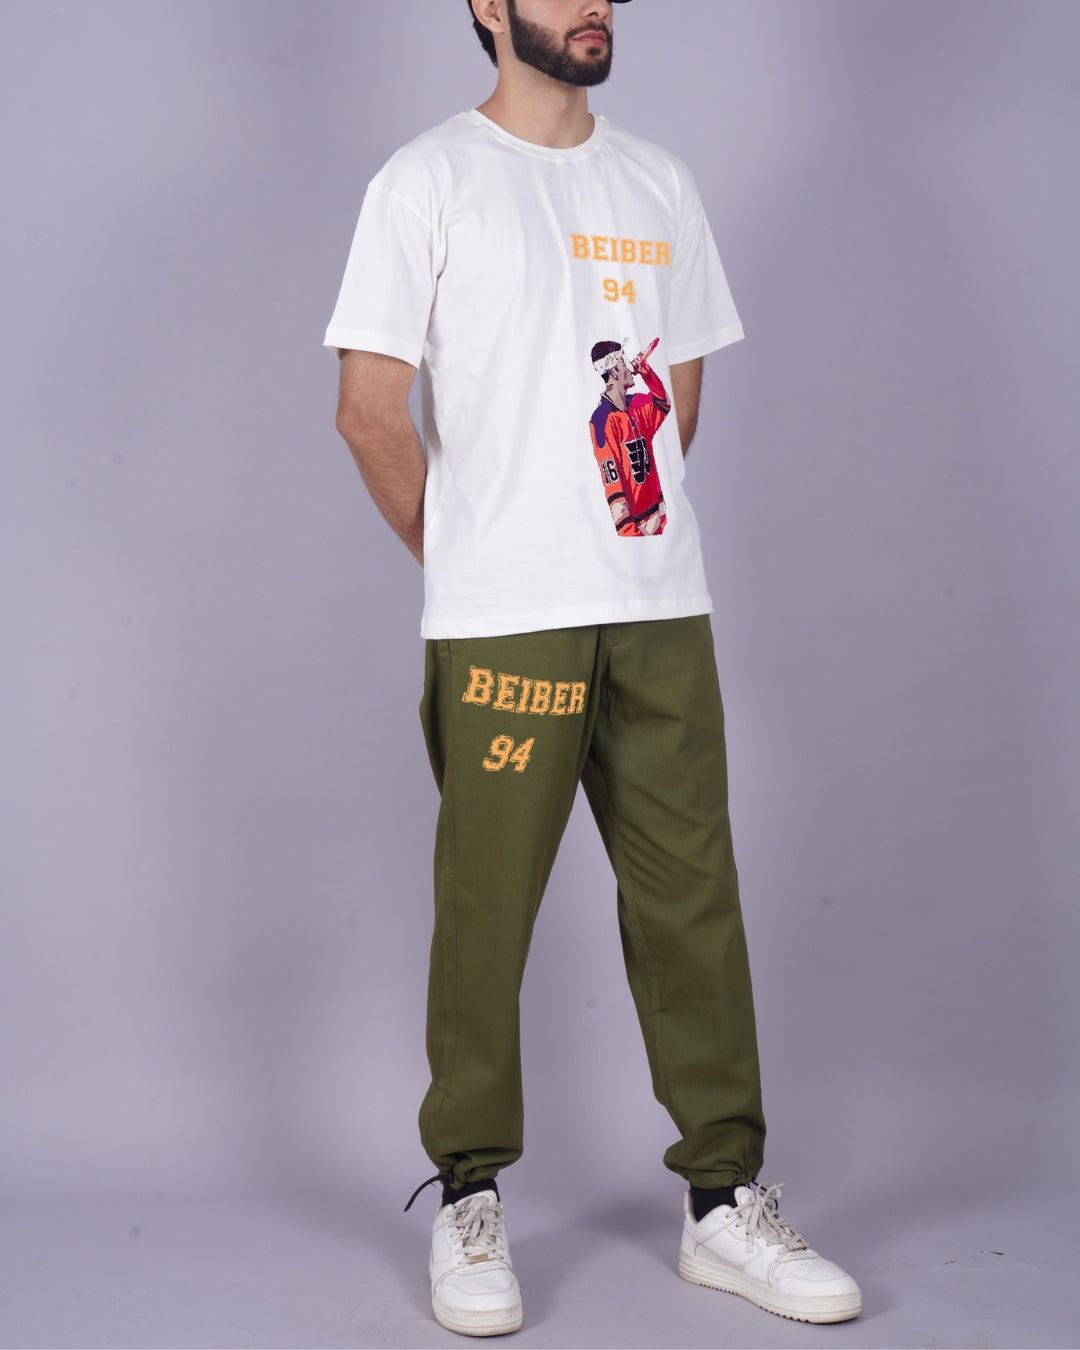 Men's Justin Bieber 94 Oversized Co-Ord Set - White and Olive